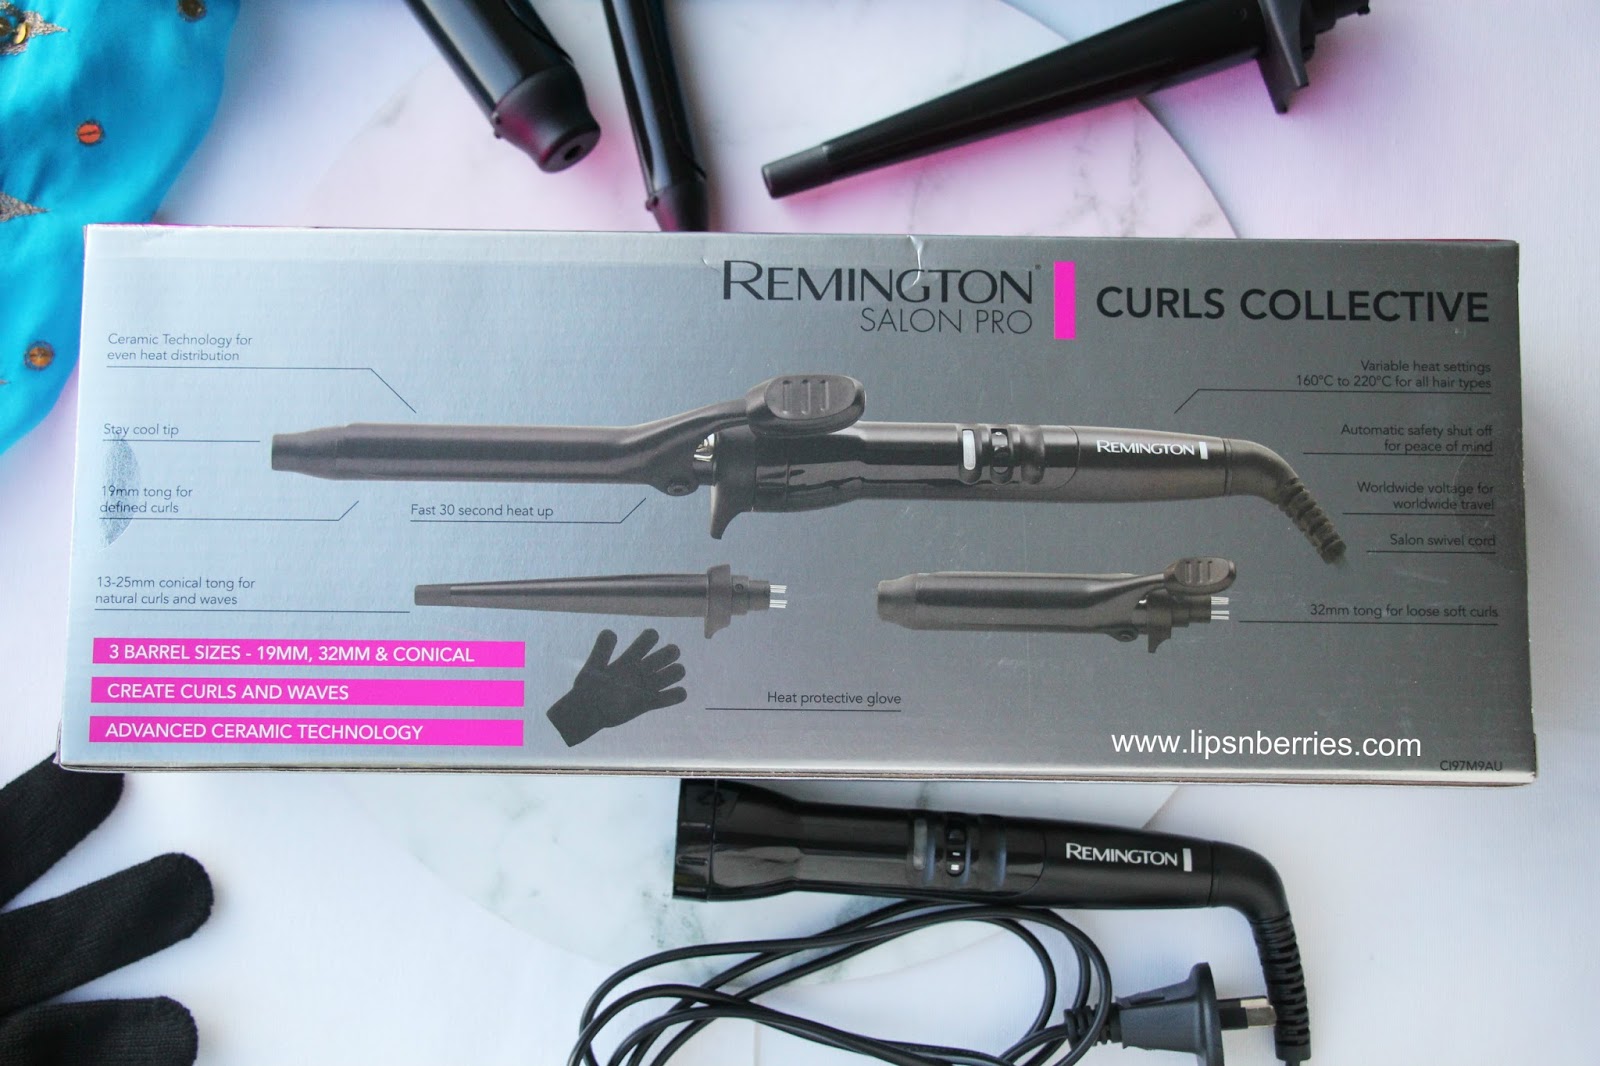 Remington Curls Collective Salon Pro Hair Curler Review | LIPS n BERRIES